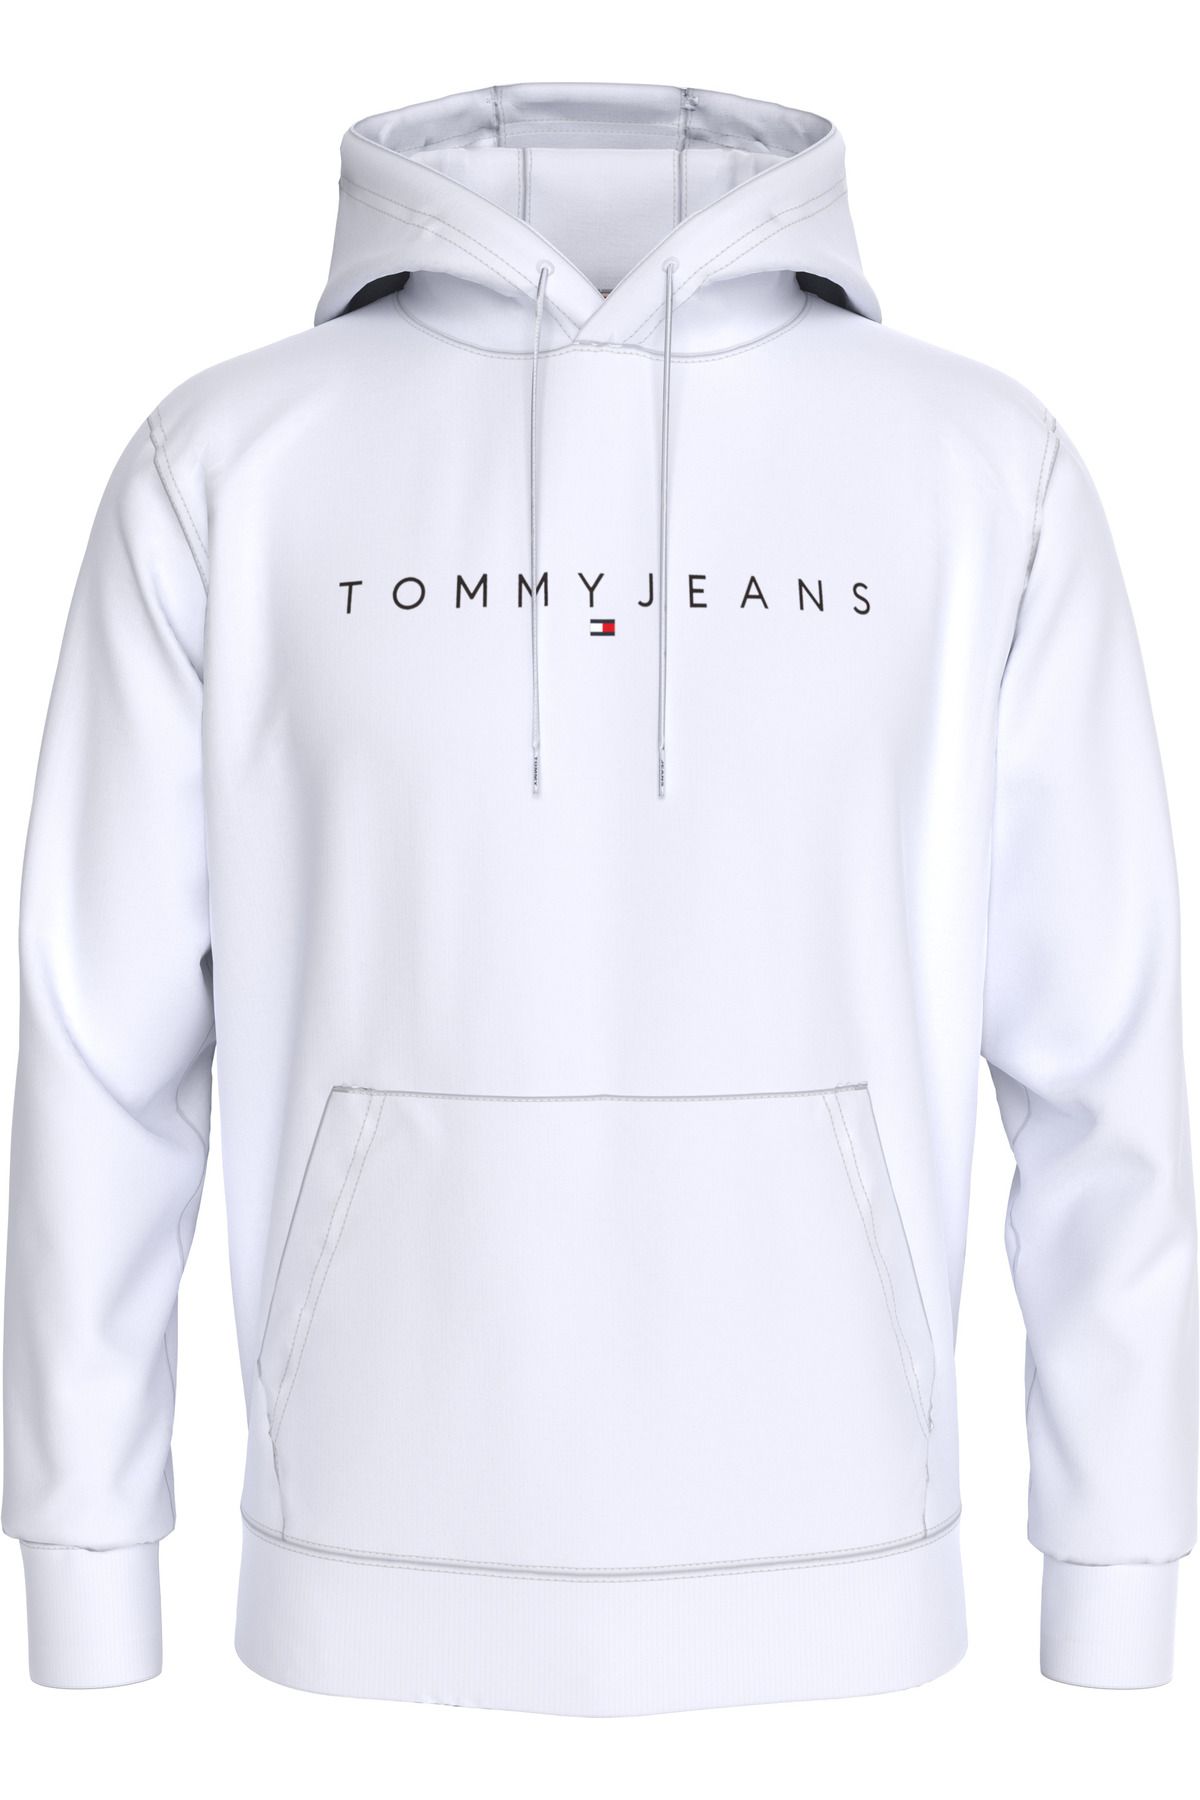 Tommy Hilfiger Erkek Marka Logolu Kapüşonlu Şık Görünüşlü Beyaz Sweatshirt Dm0dm17985-Ybr